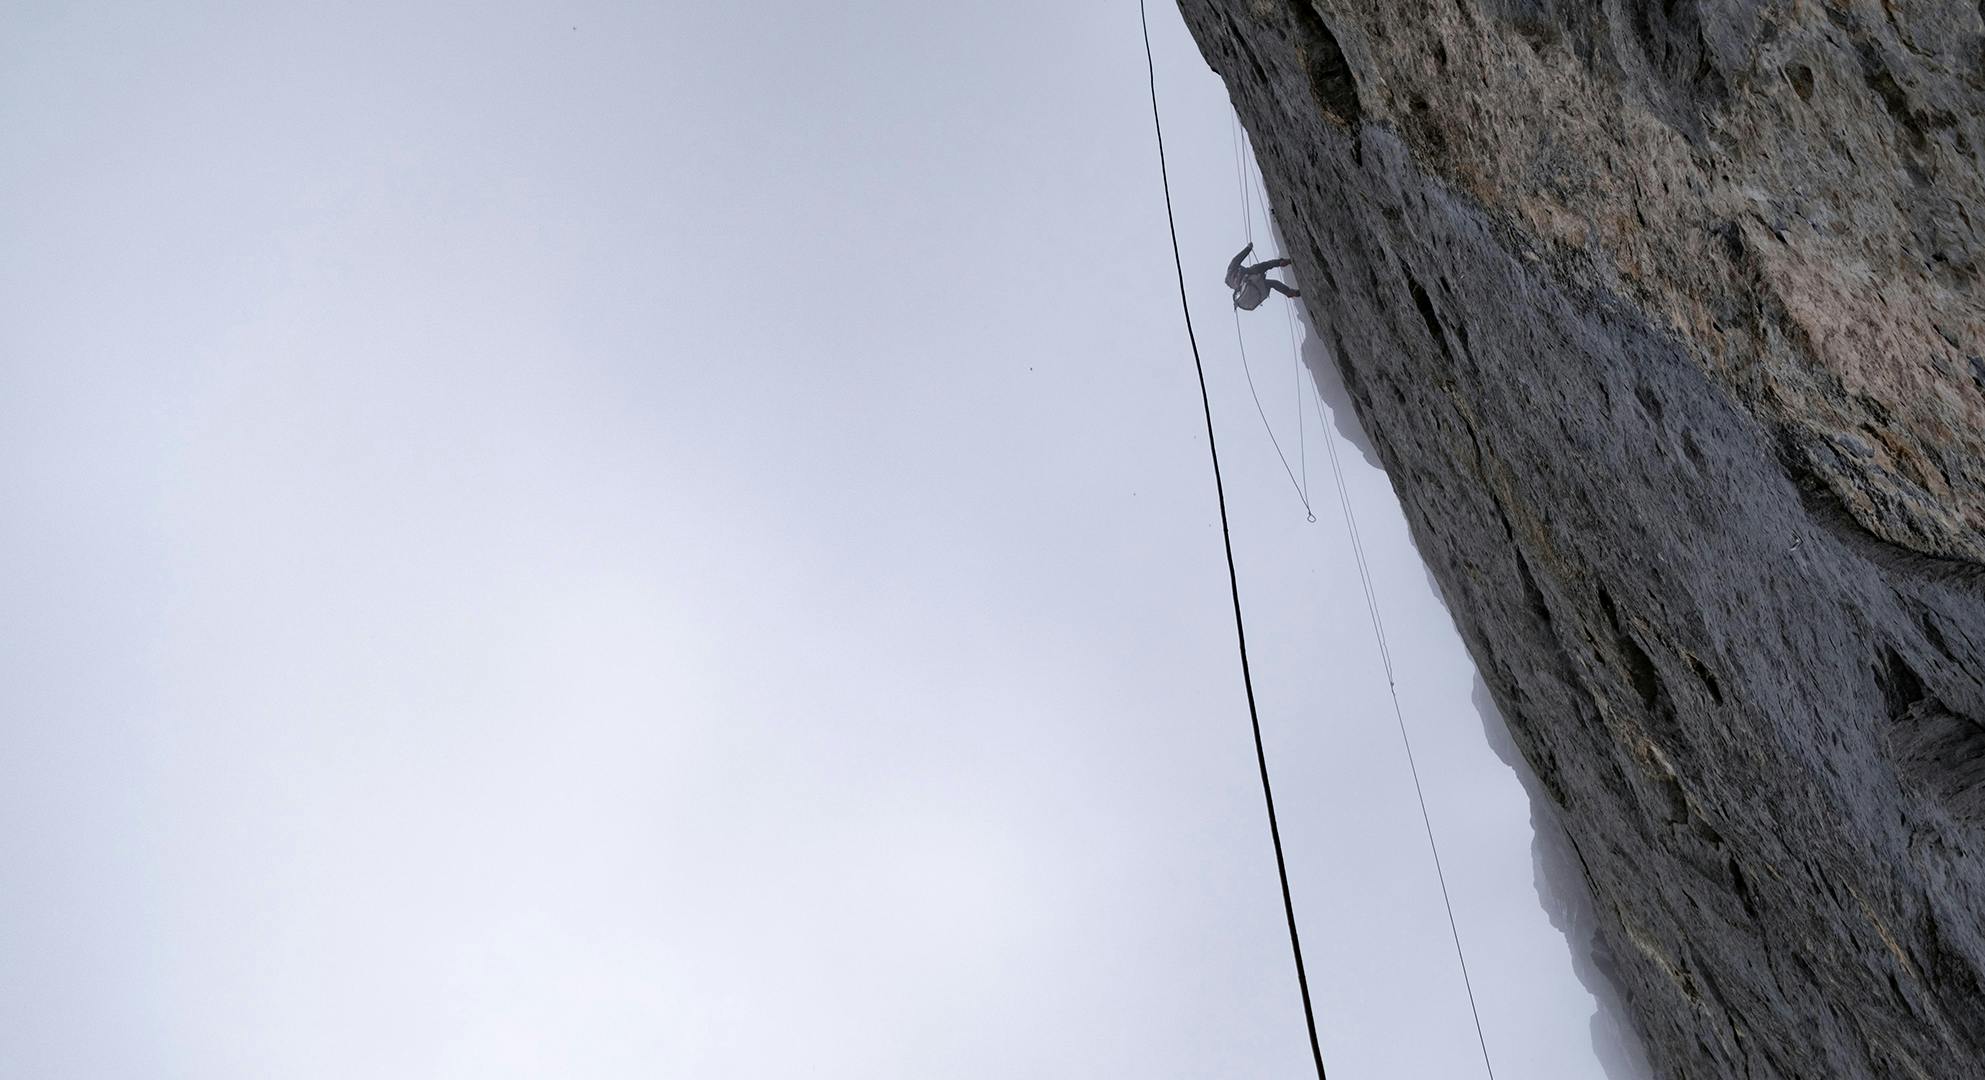 Black Diamond athlete Babsi Zangerl climbing the Eiger